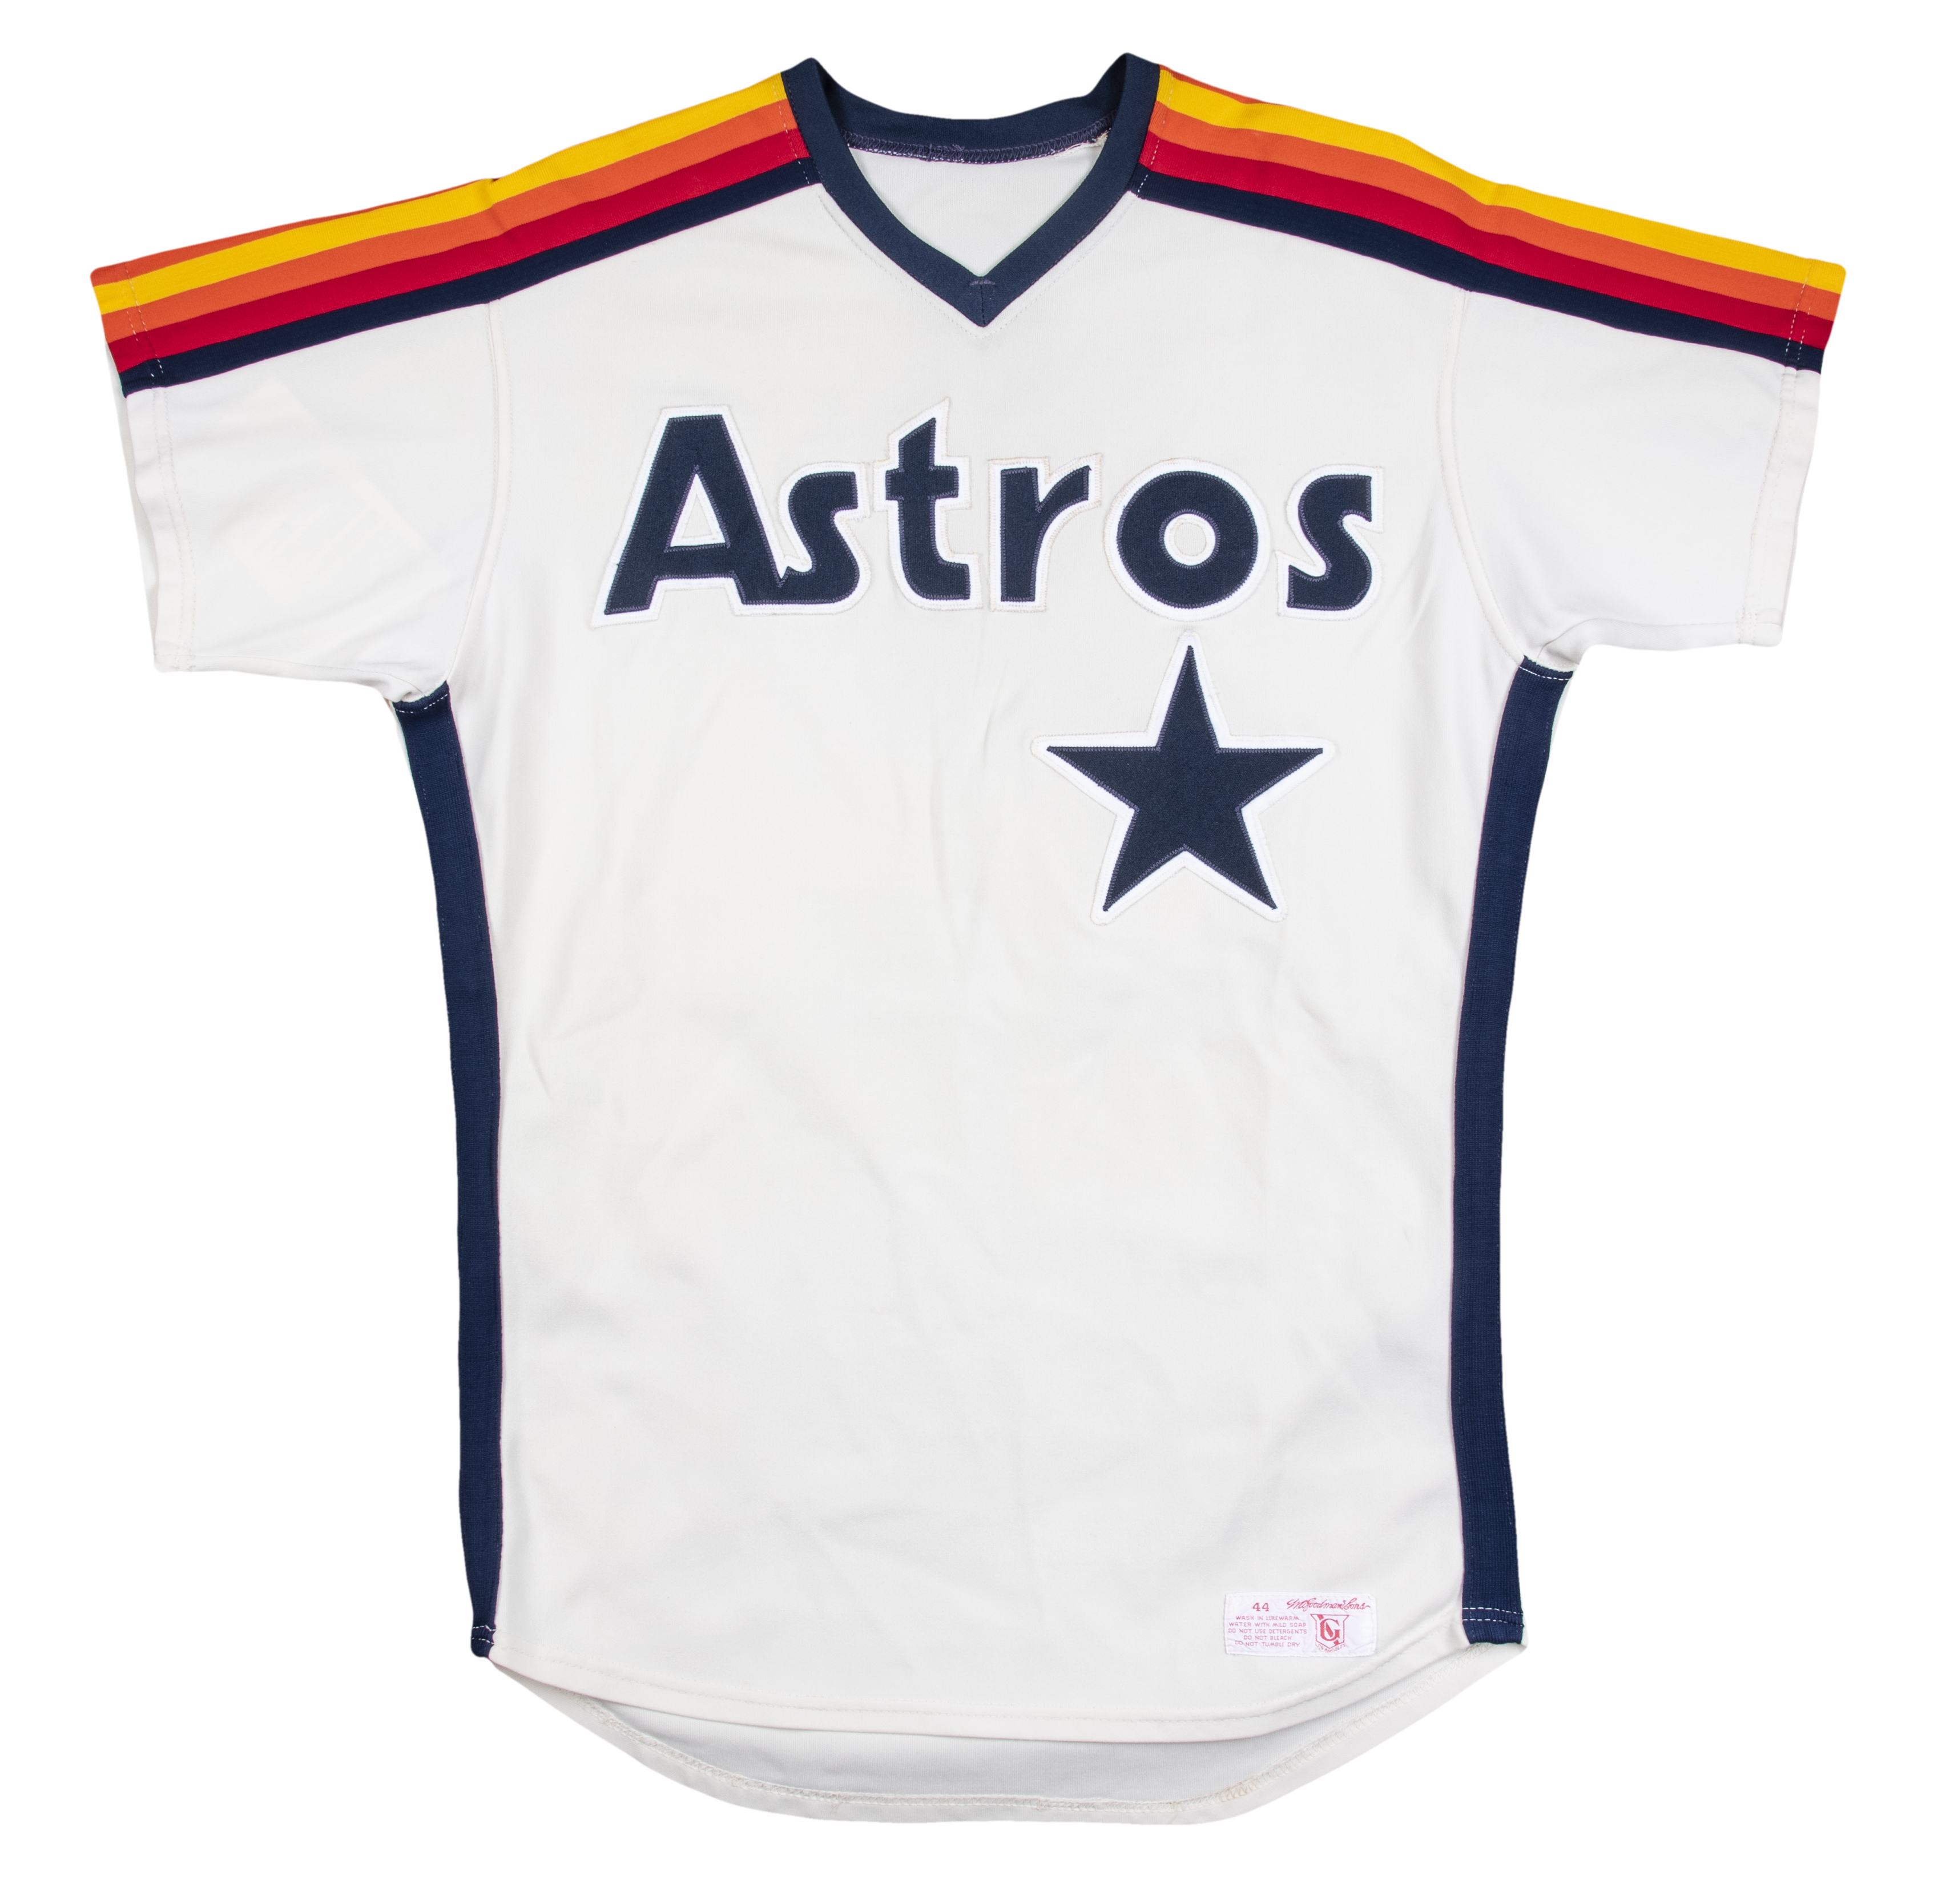 astros rainbow shoulder jersey